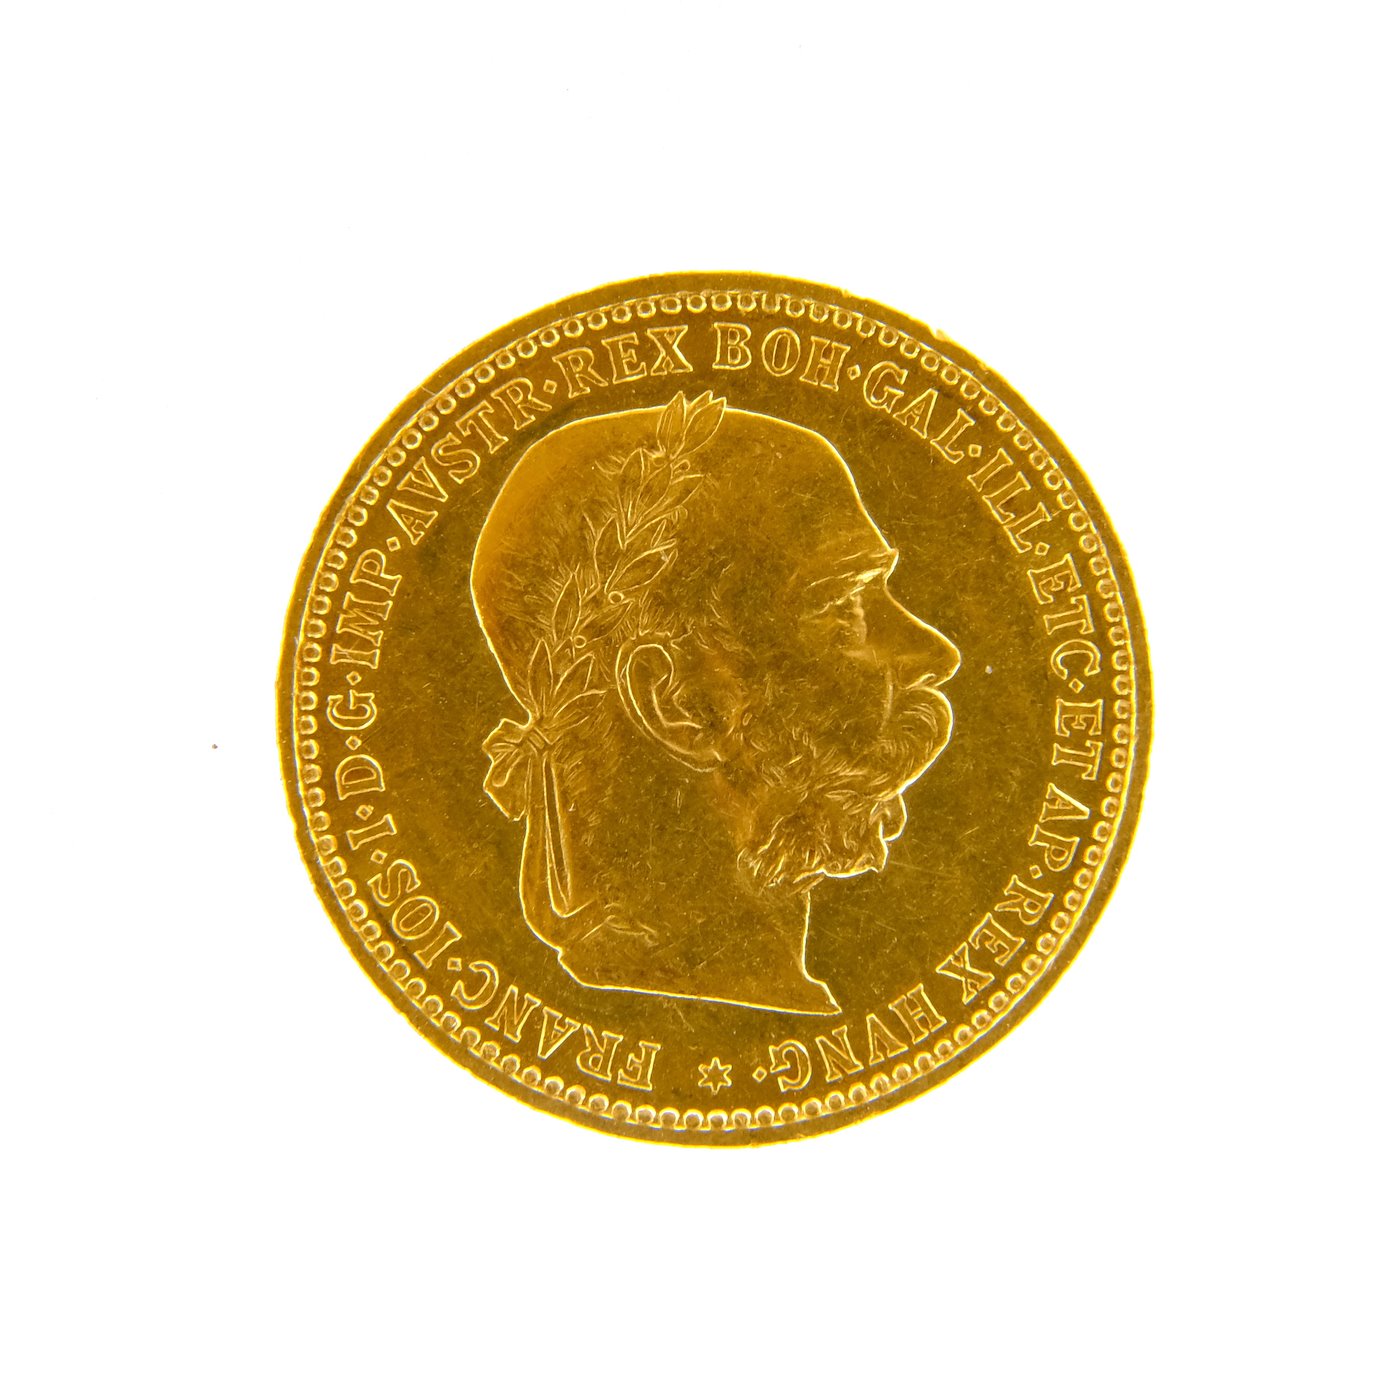 .. - Rakousko Uhersko zlatá 10 Koruna 1897 rakouská,  zlato 900/1000, hrubá hmotnost 3,387g